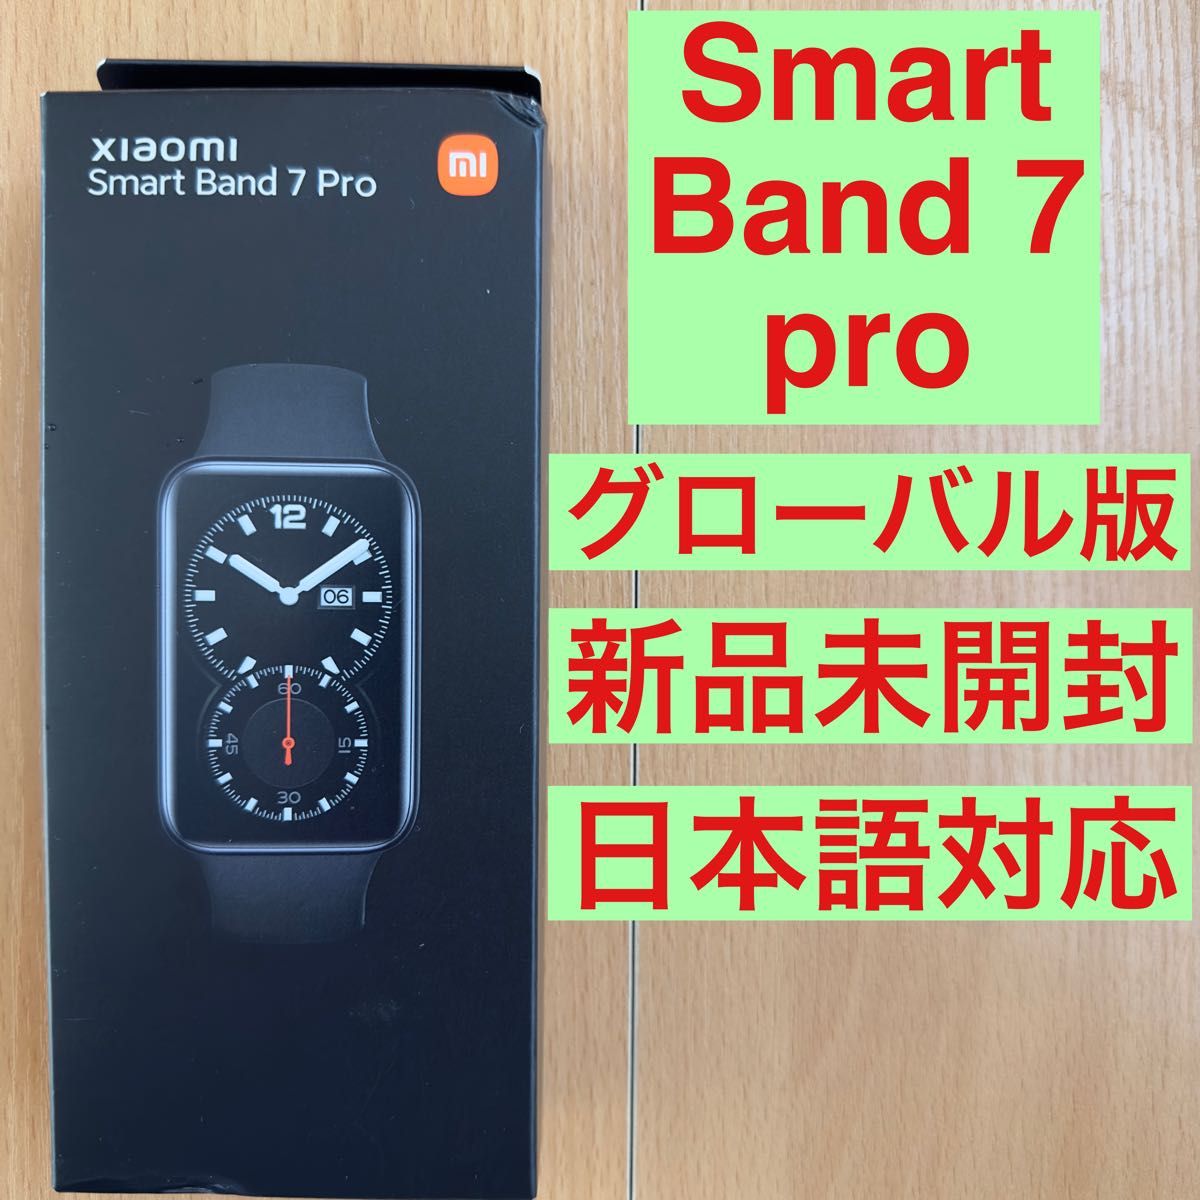 正規品! 日本語版 Xiaomi mi smart band 7 tdh-latinoamerica.de